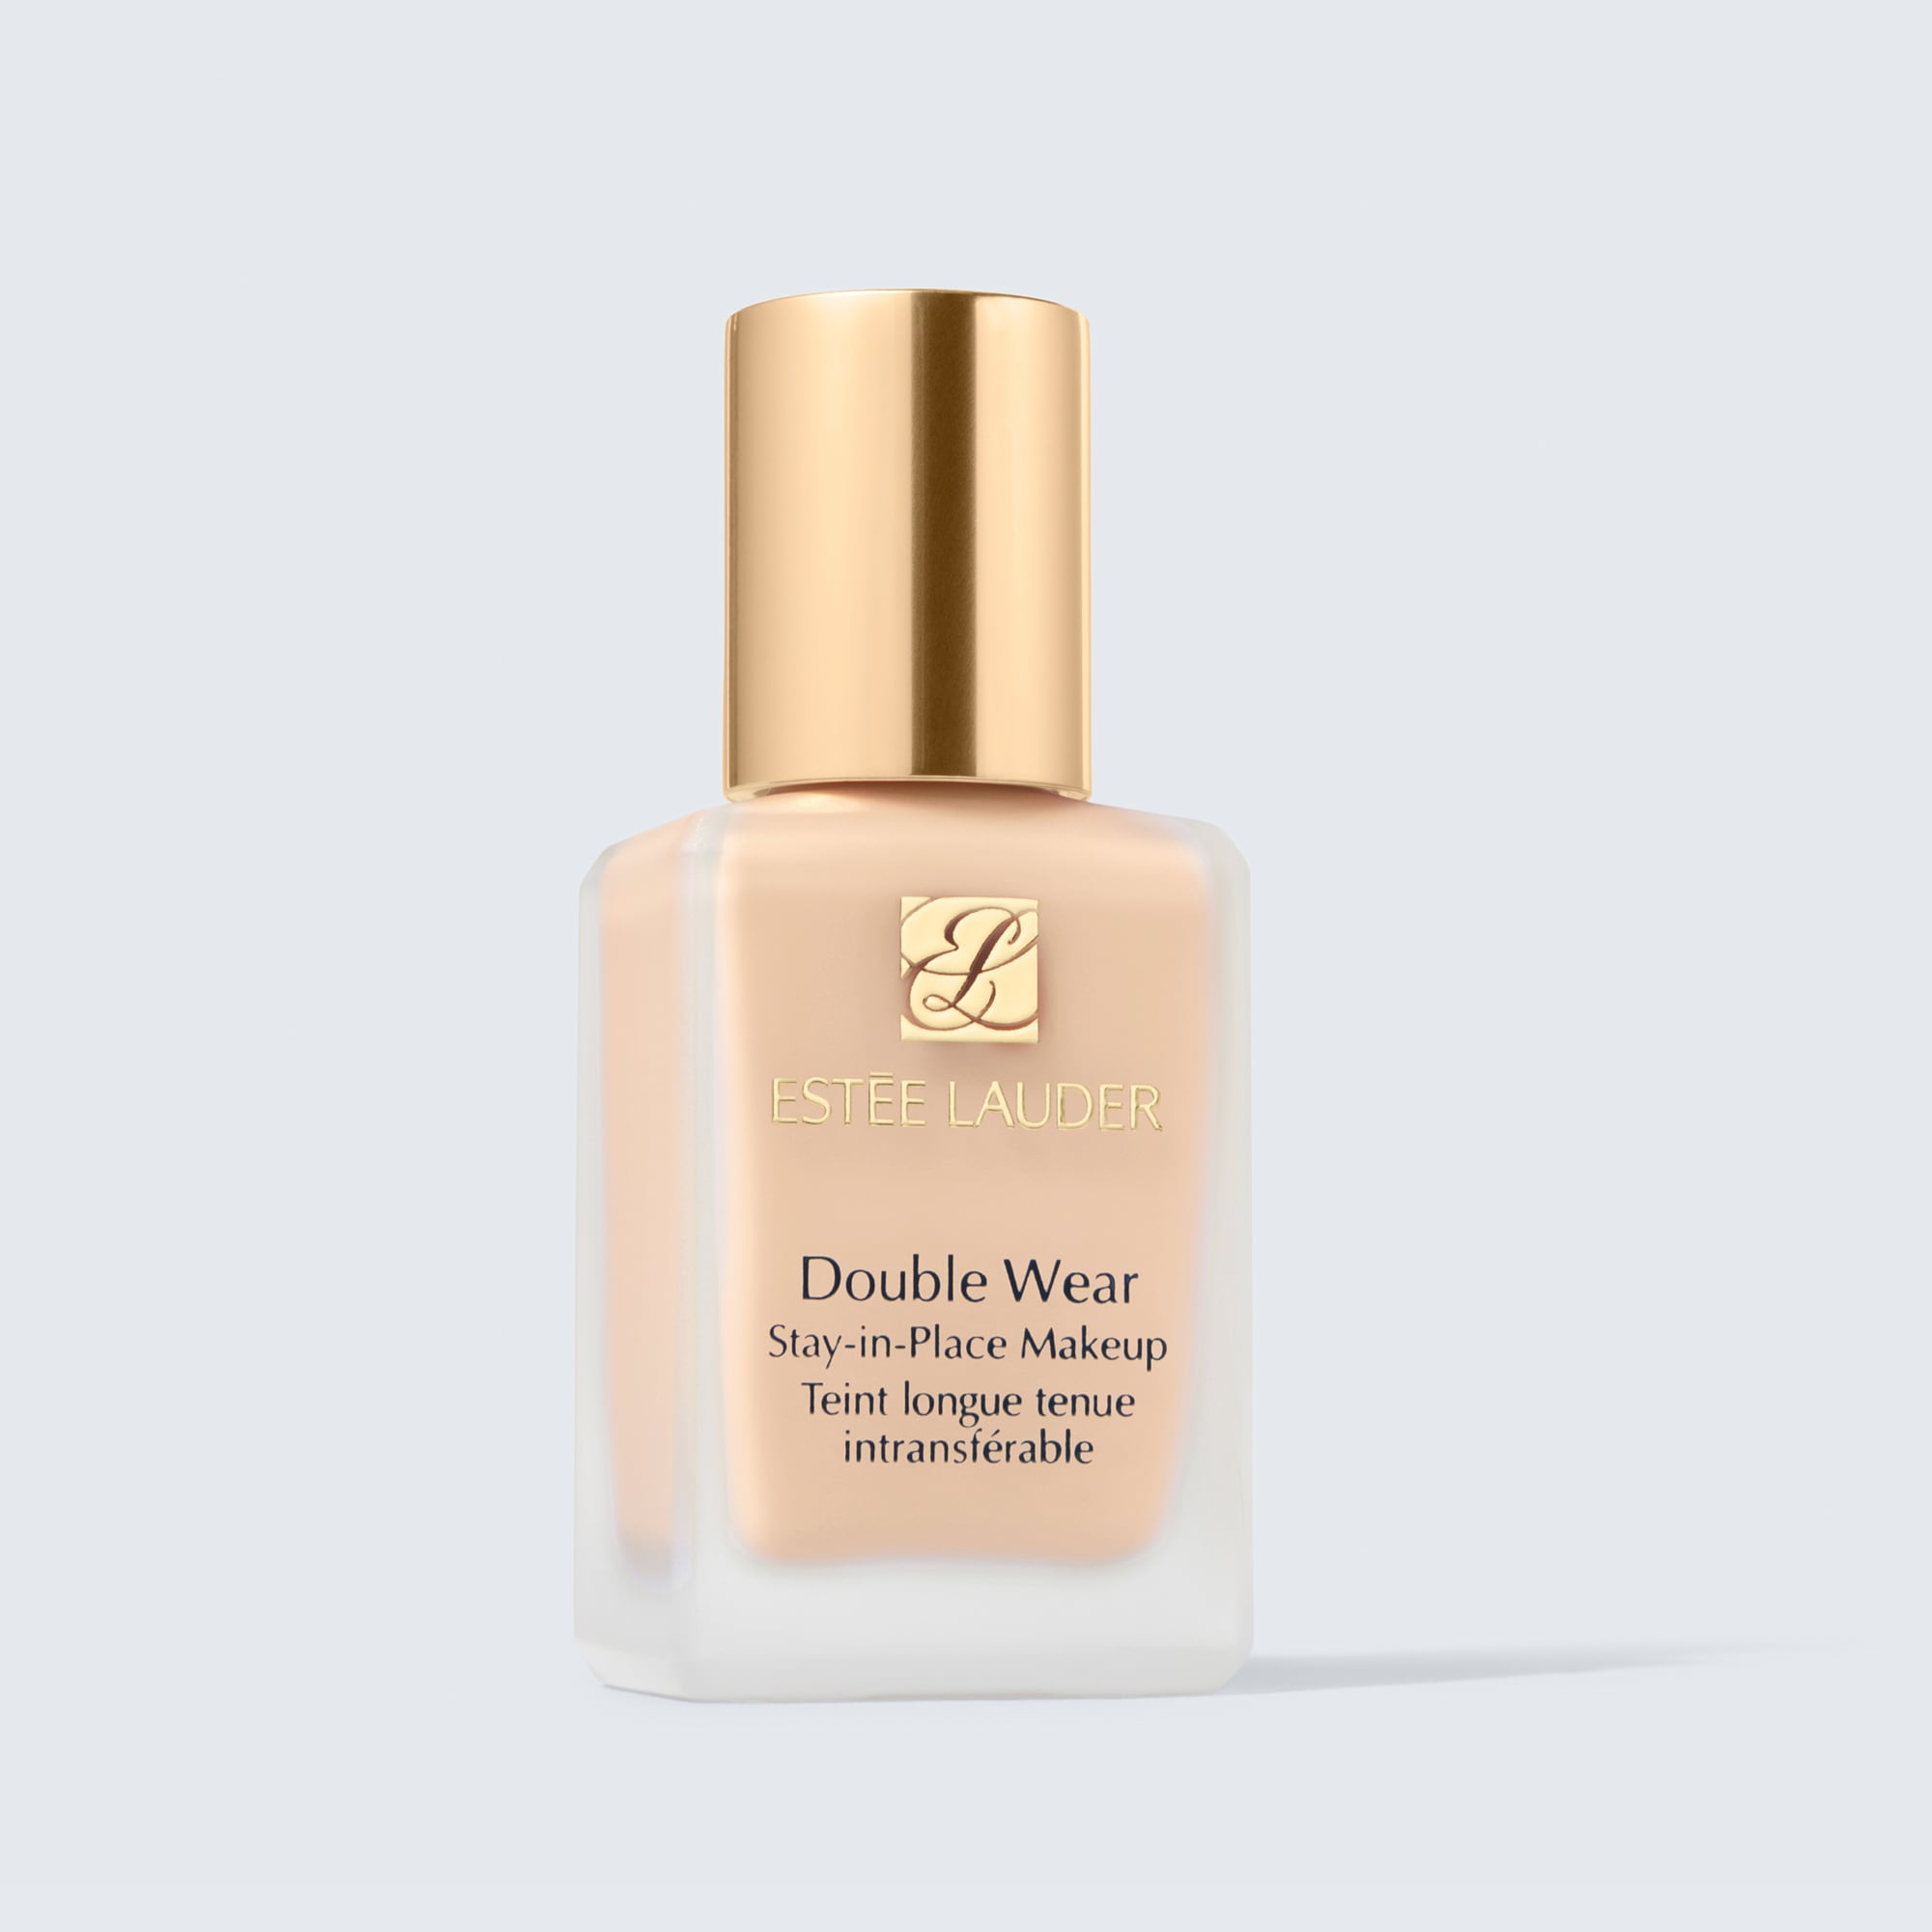 Estee Lauder Double Wear Stay-in-Place Makeup, Pebble 3C2 - 1 fl oz bottle